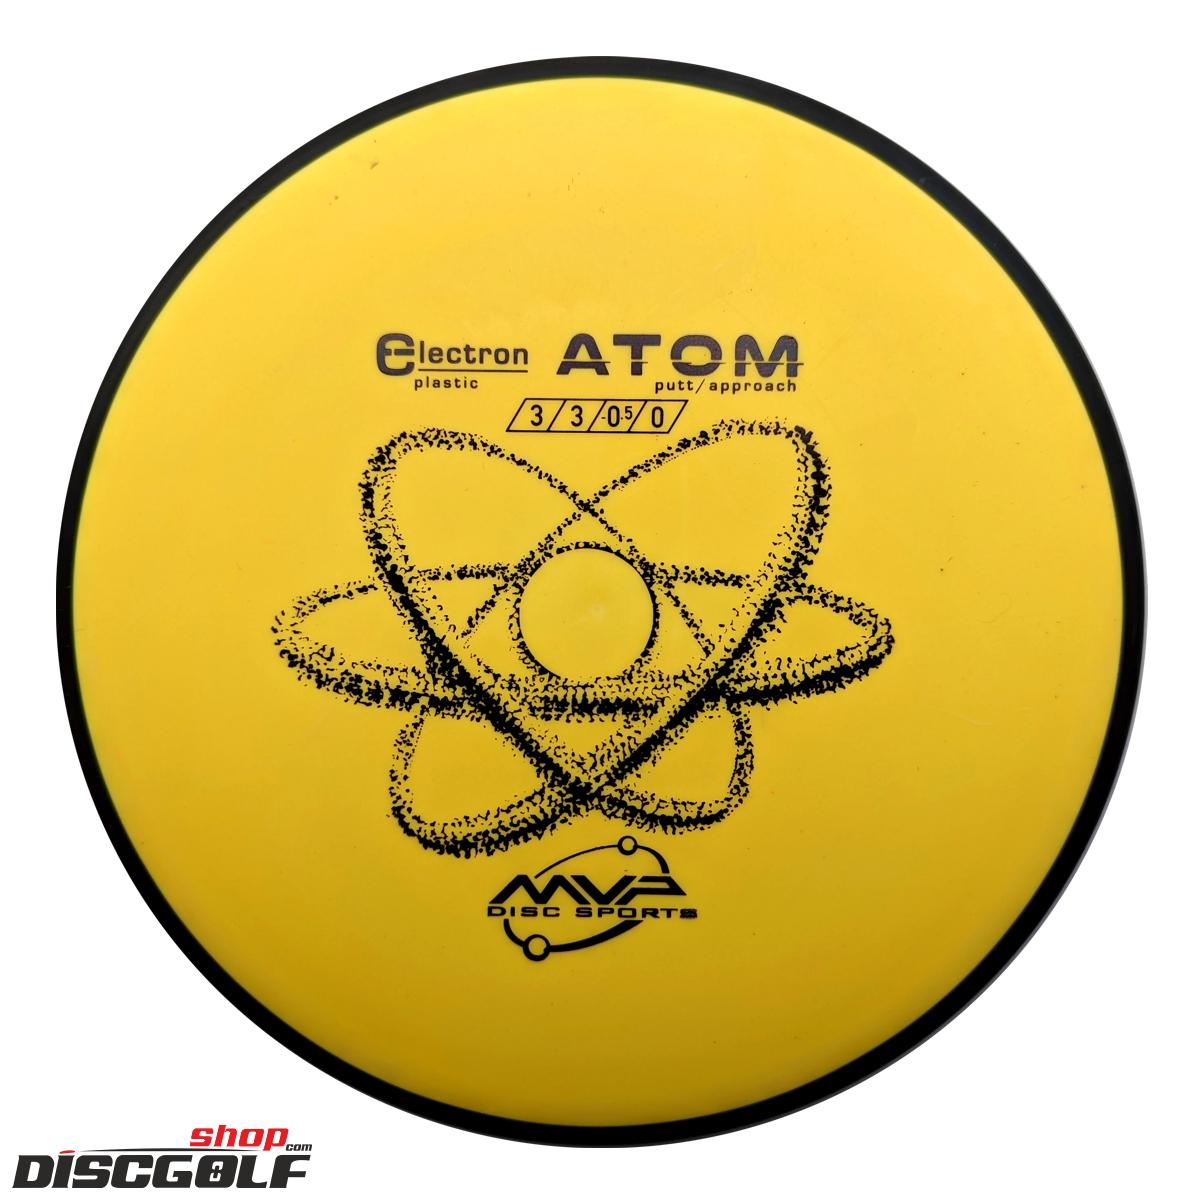 MVP Atom Electron (discgolf)